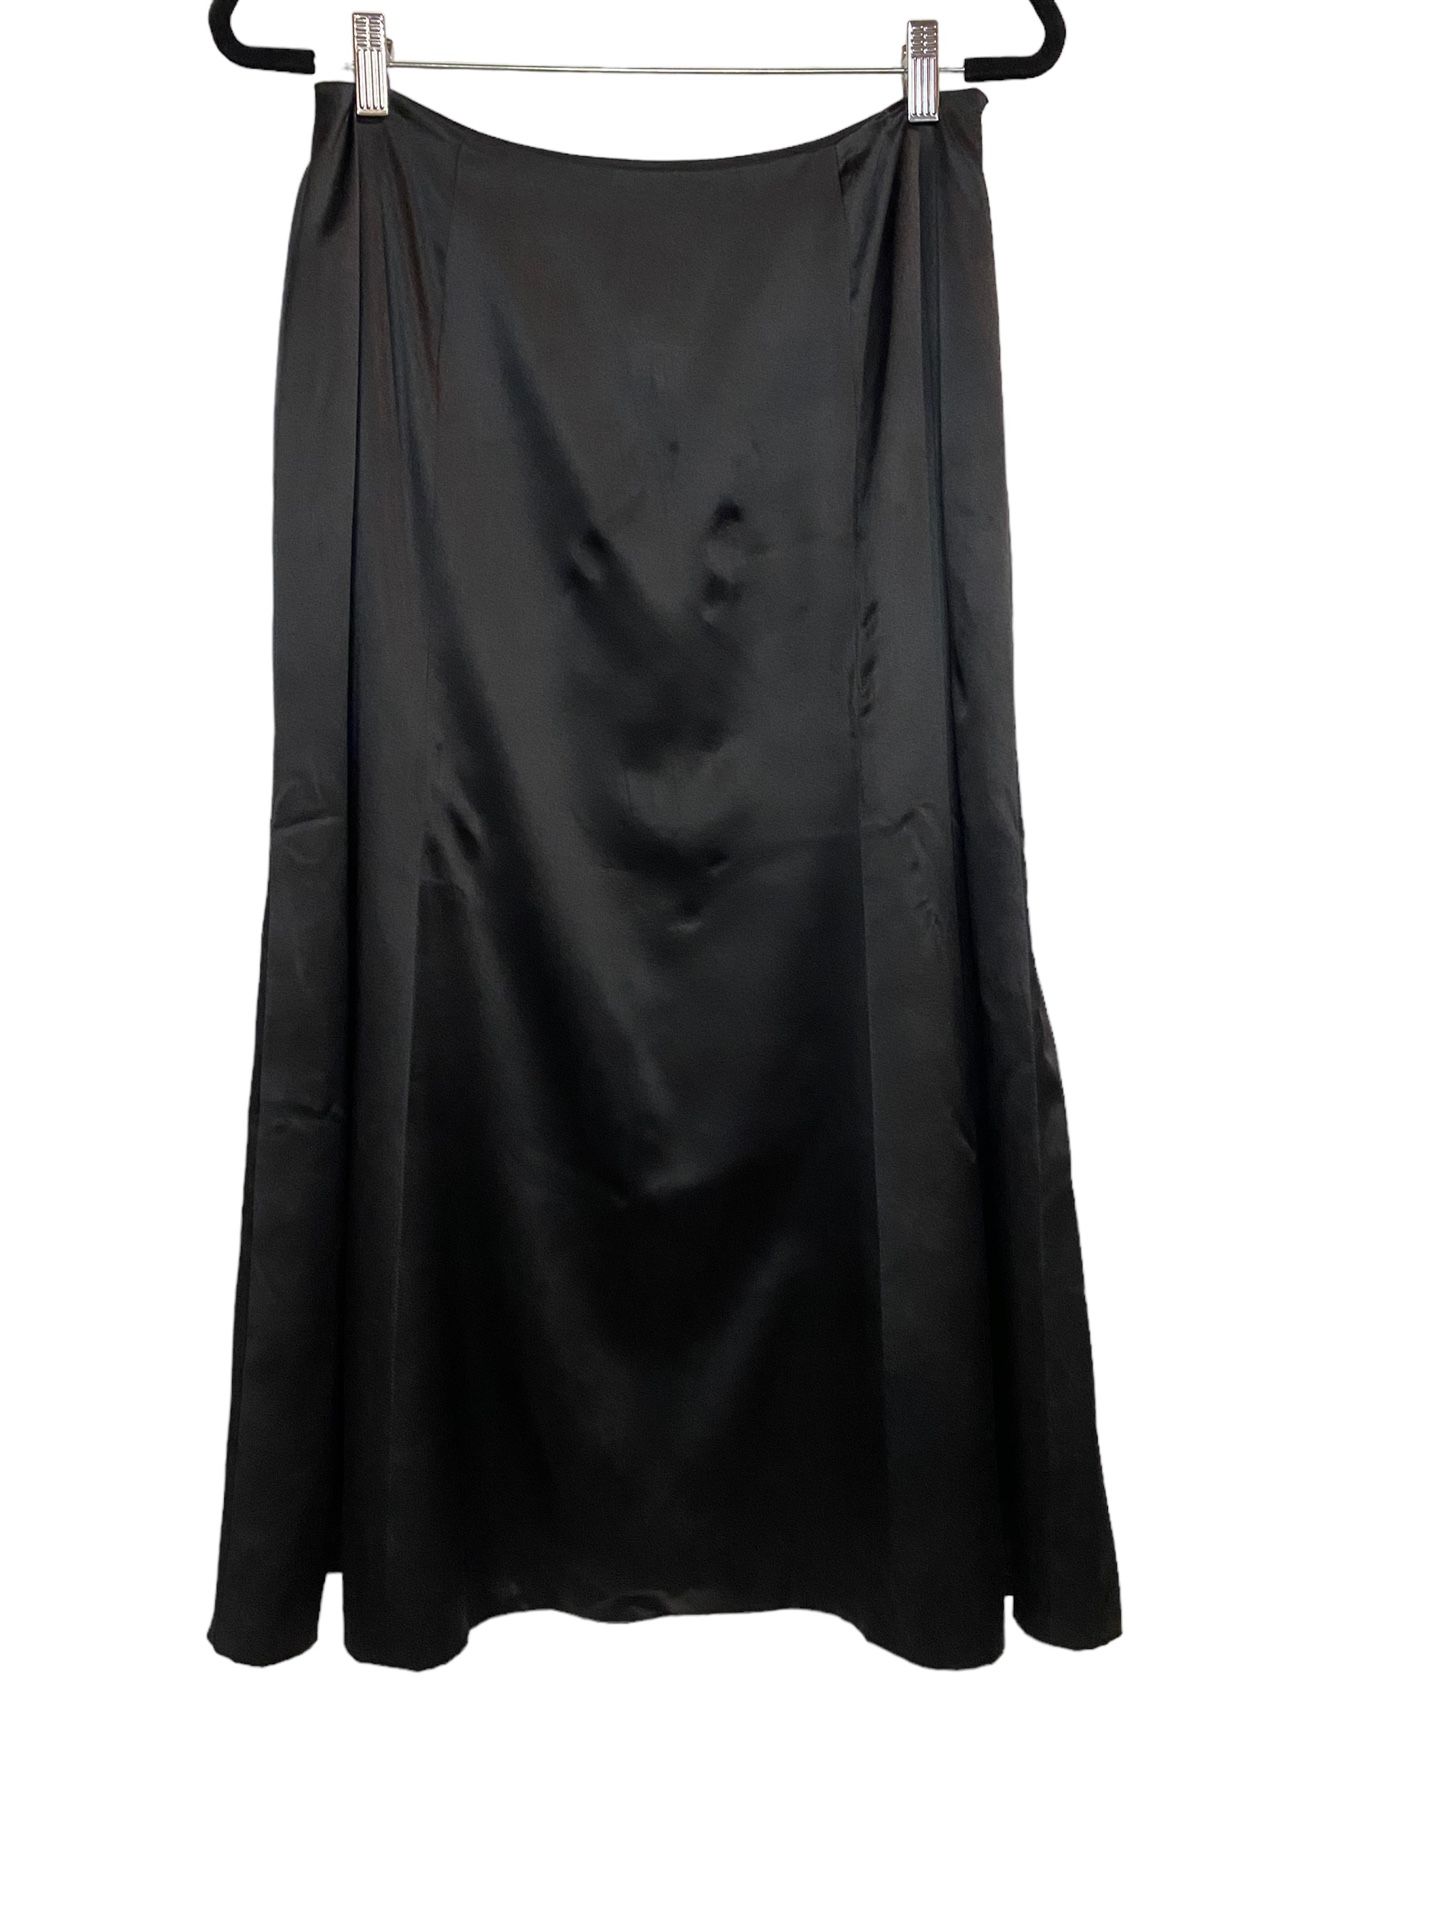 Talbots Pure Silk Pencil Skirt Womens Size 10 Petite Black Side Zip